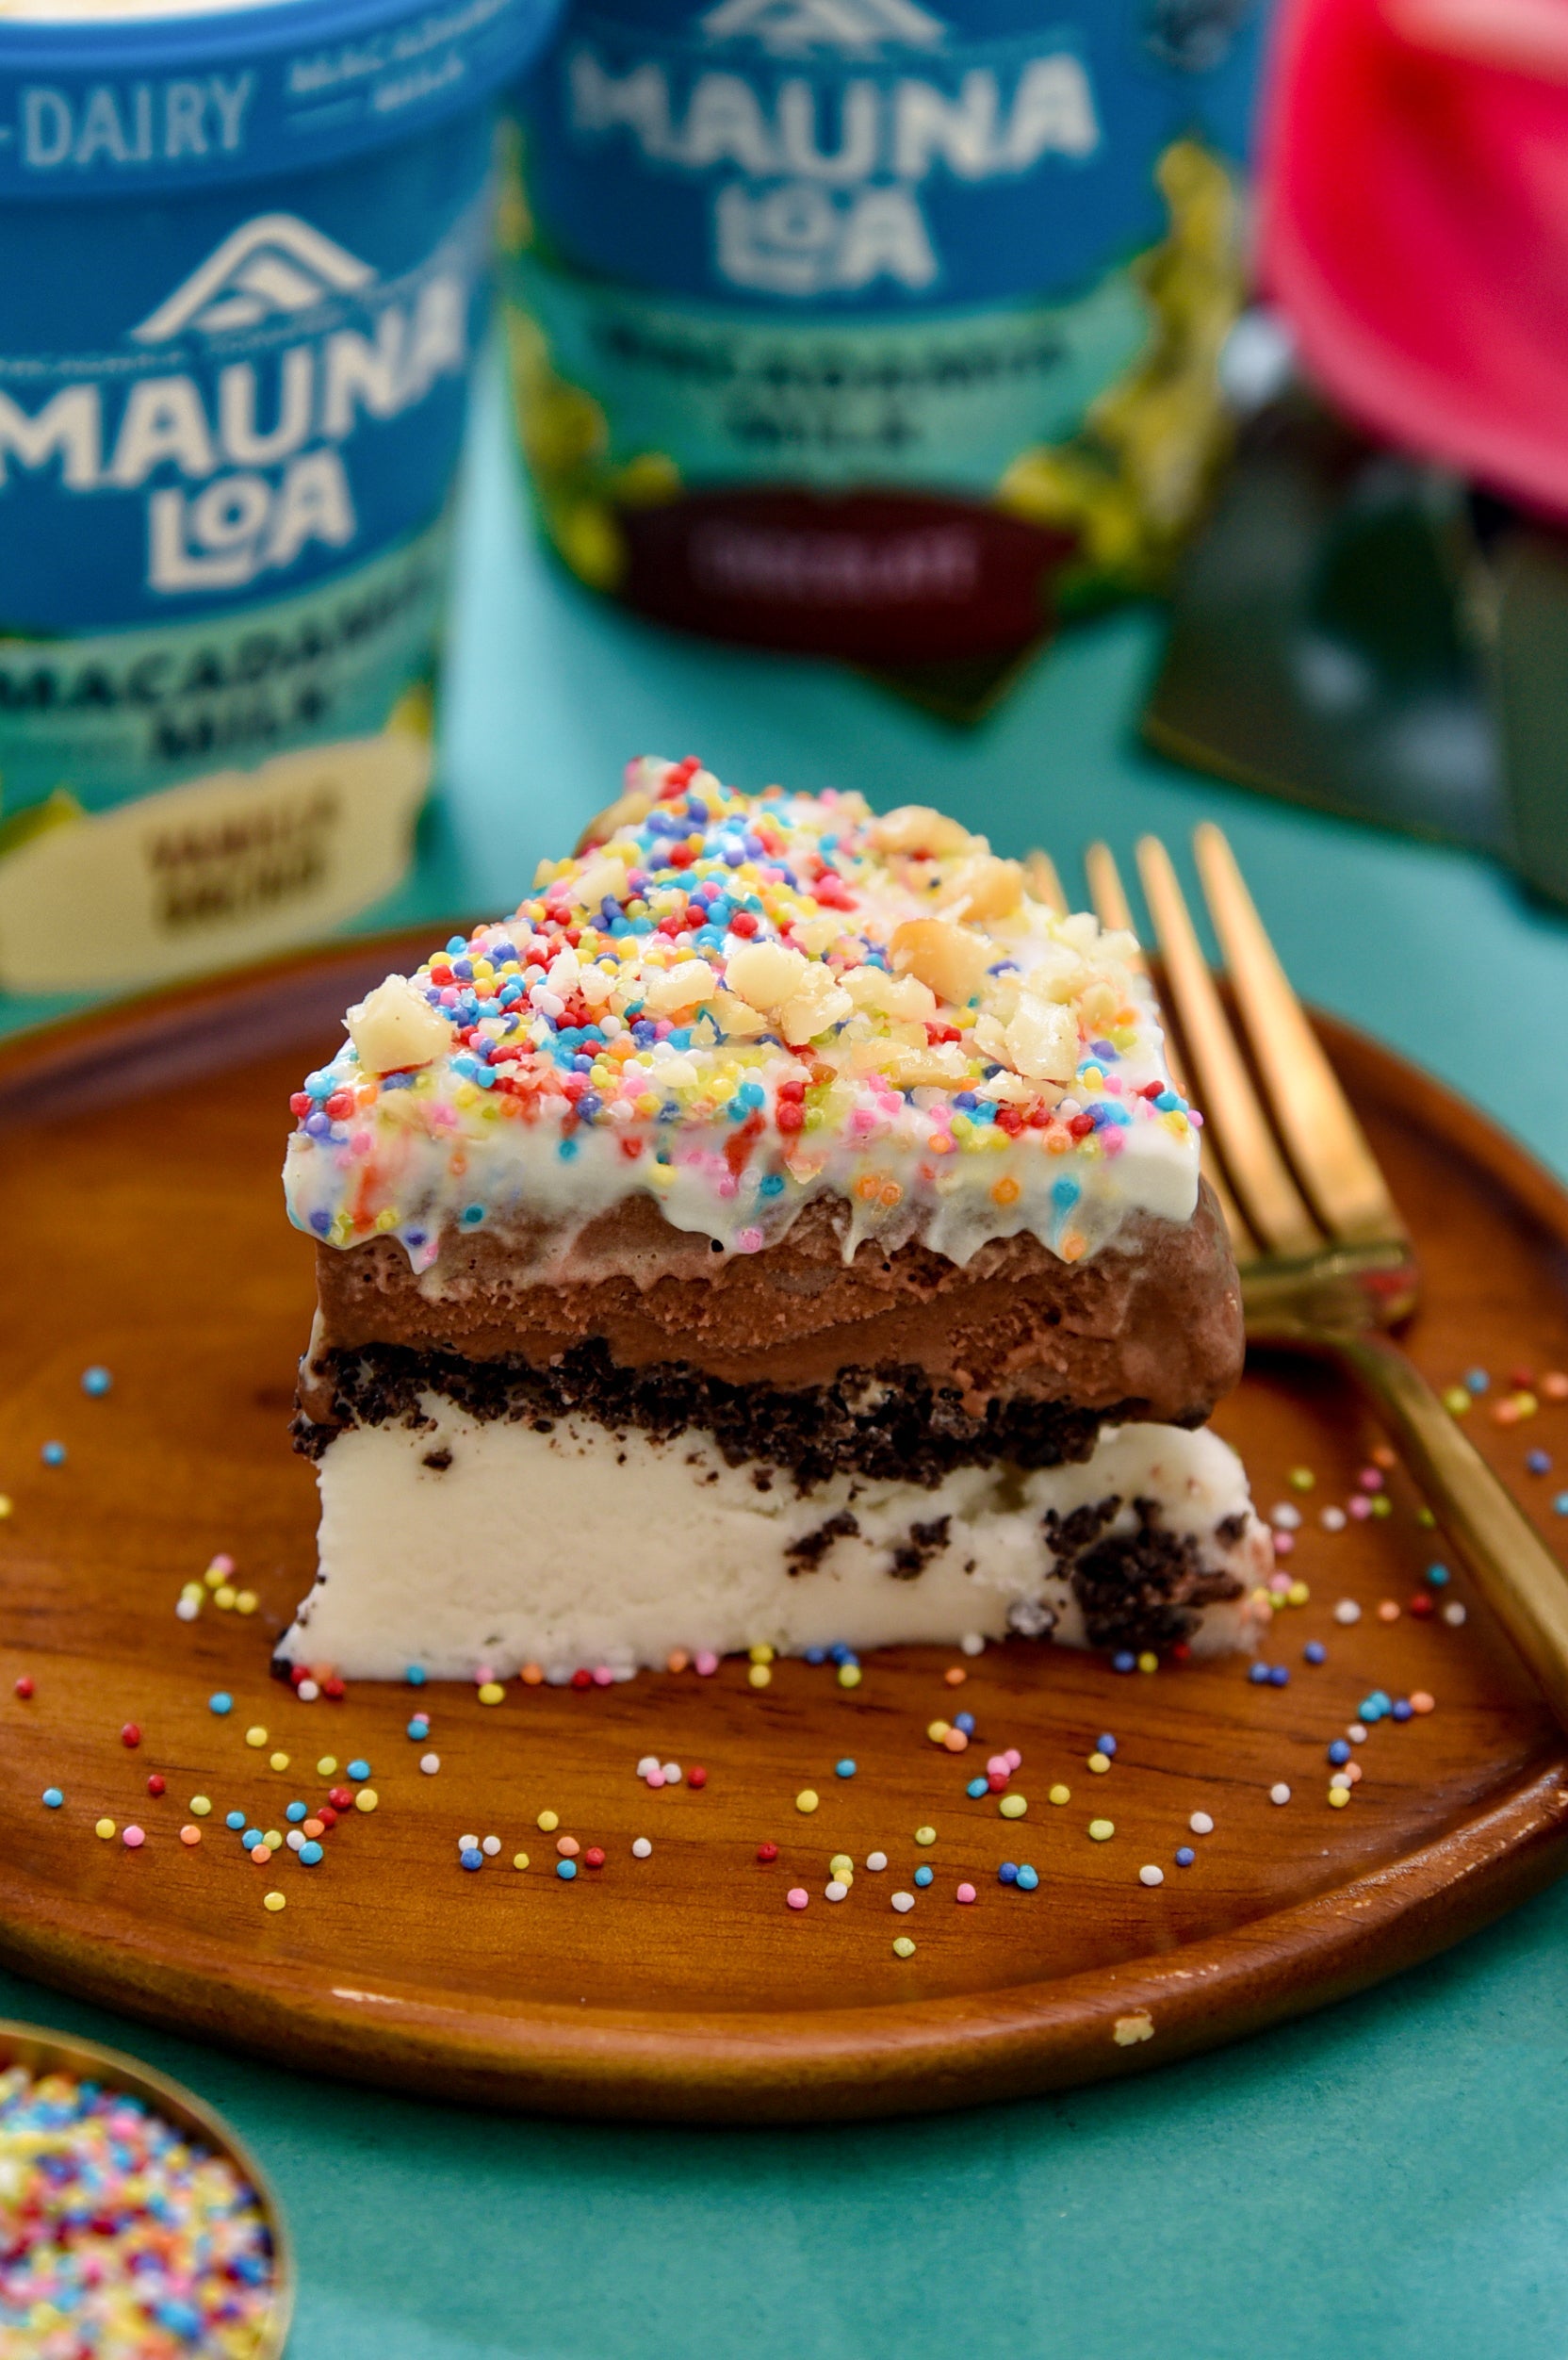 Mauna Loa's Dairy-Free Layered Ice Cream Cake